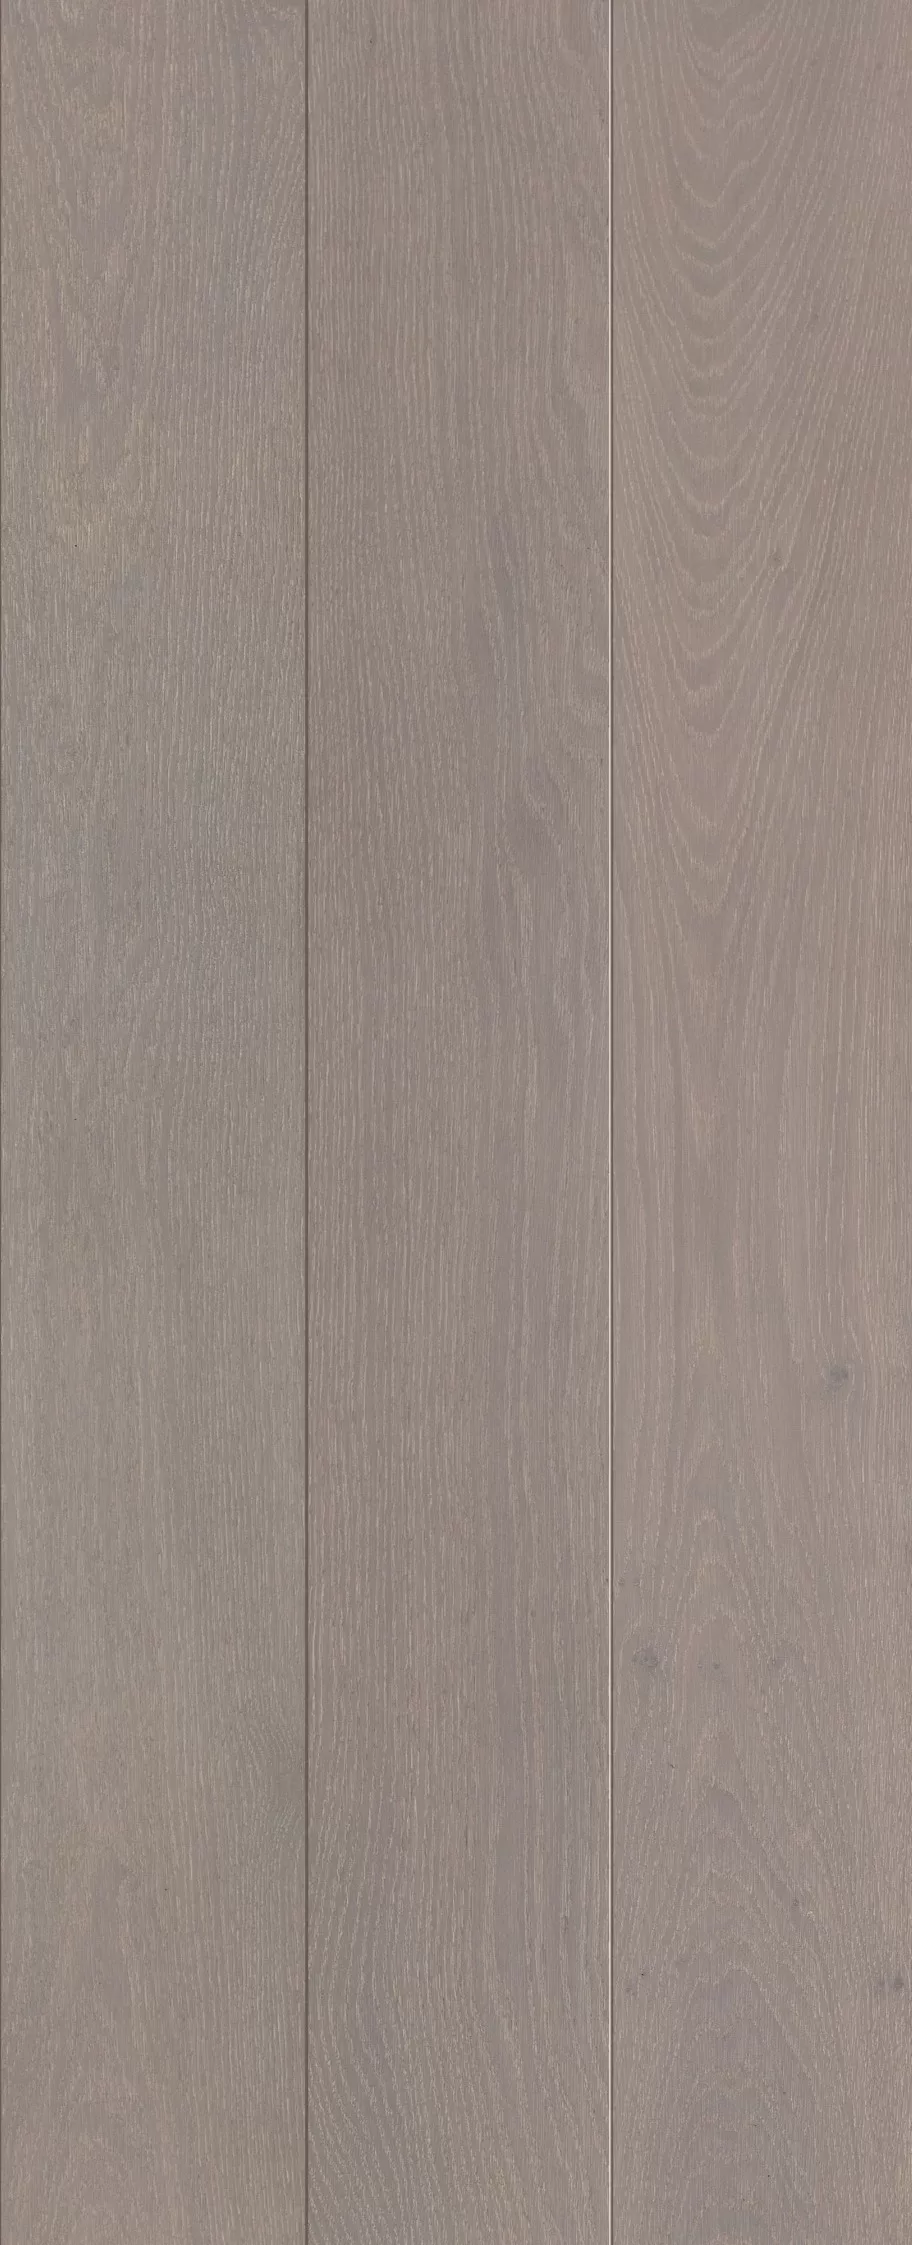 Grey Engineered Timber Flooring